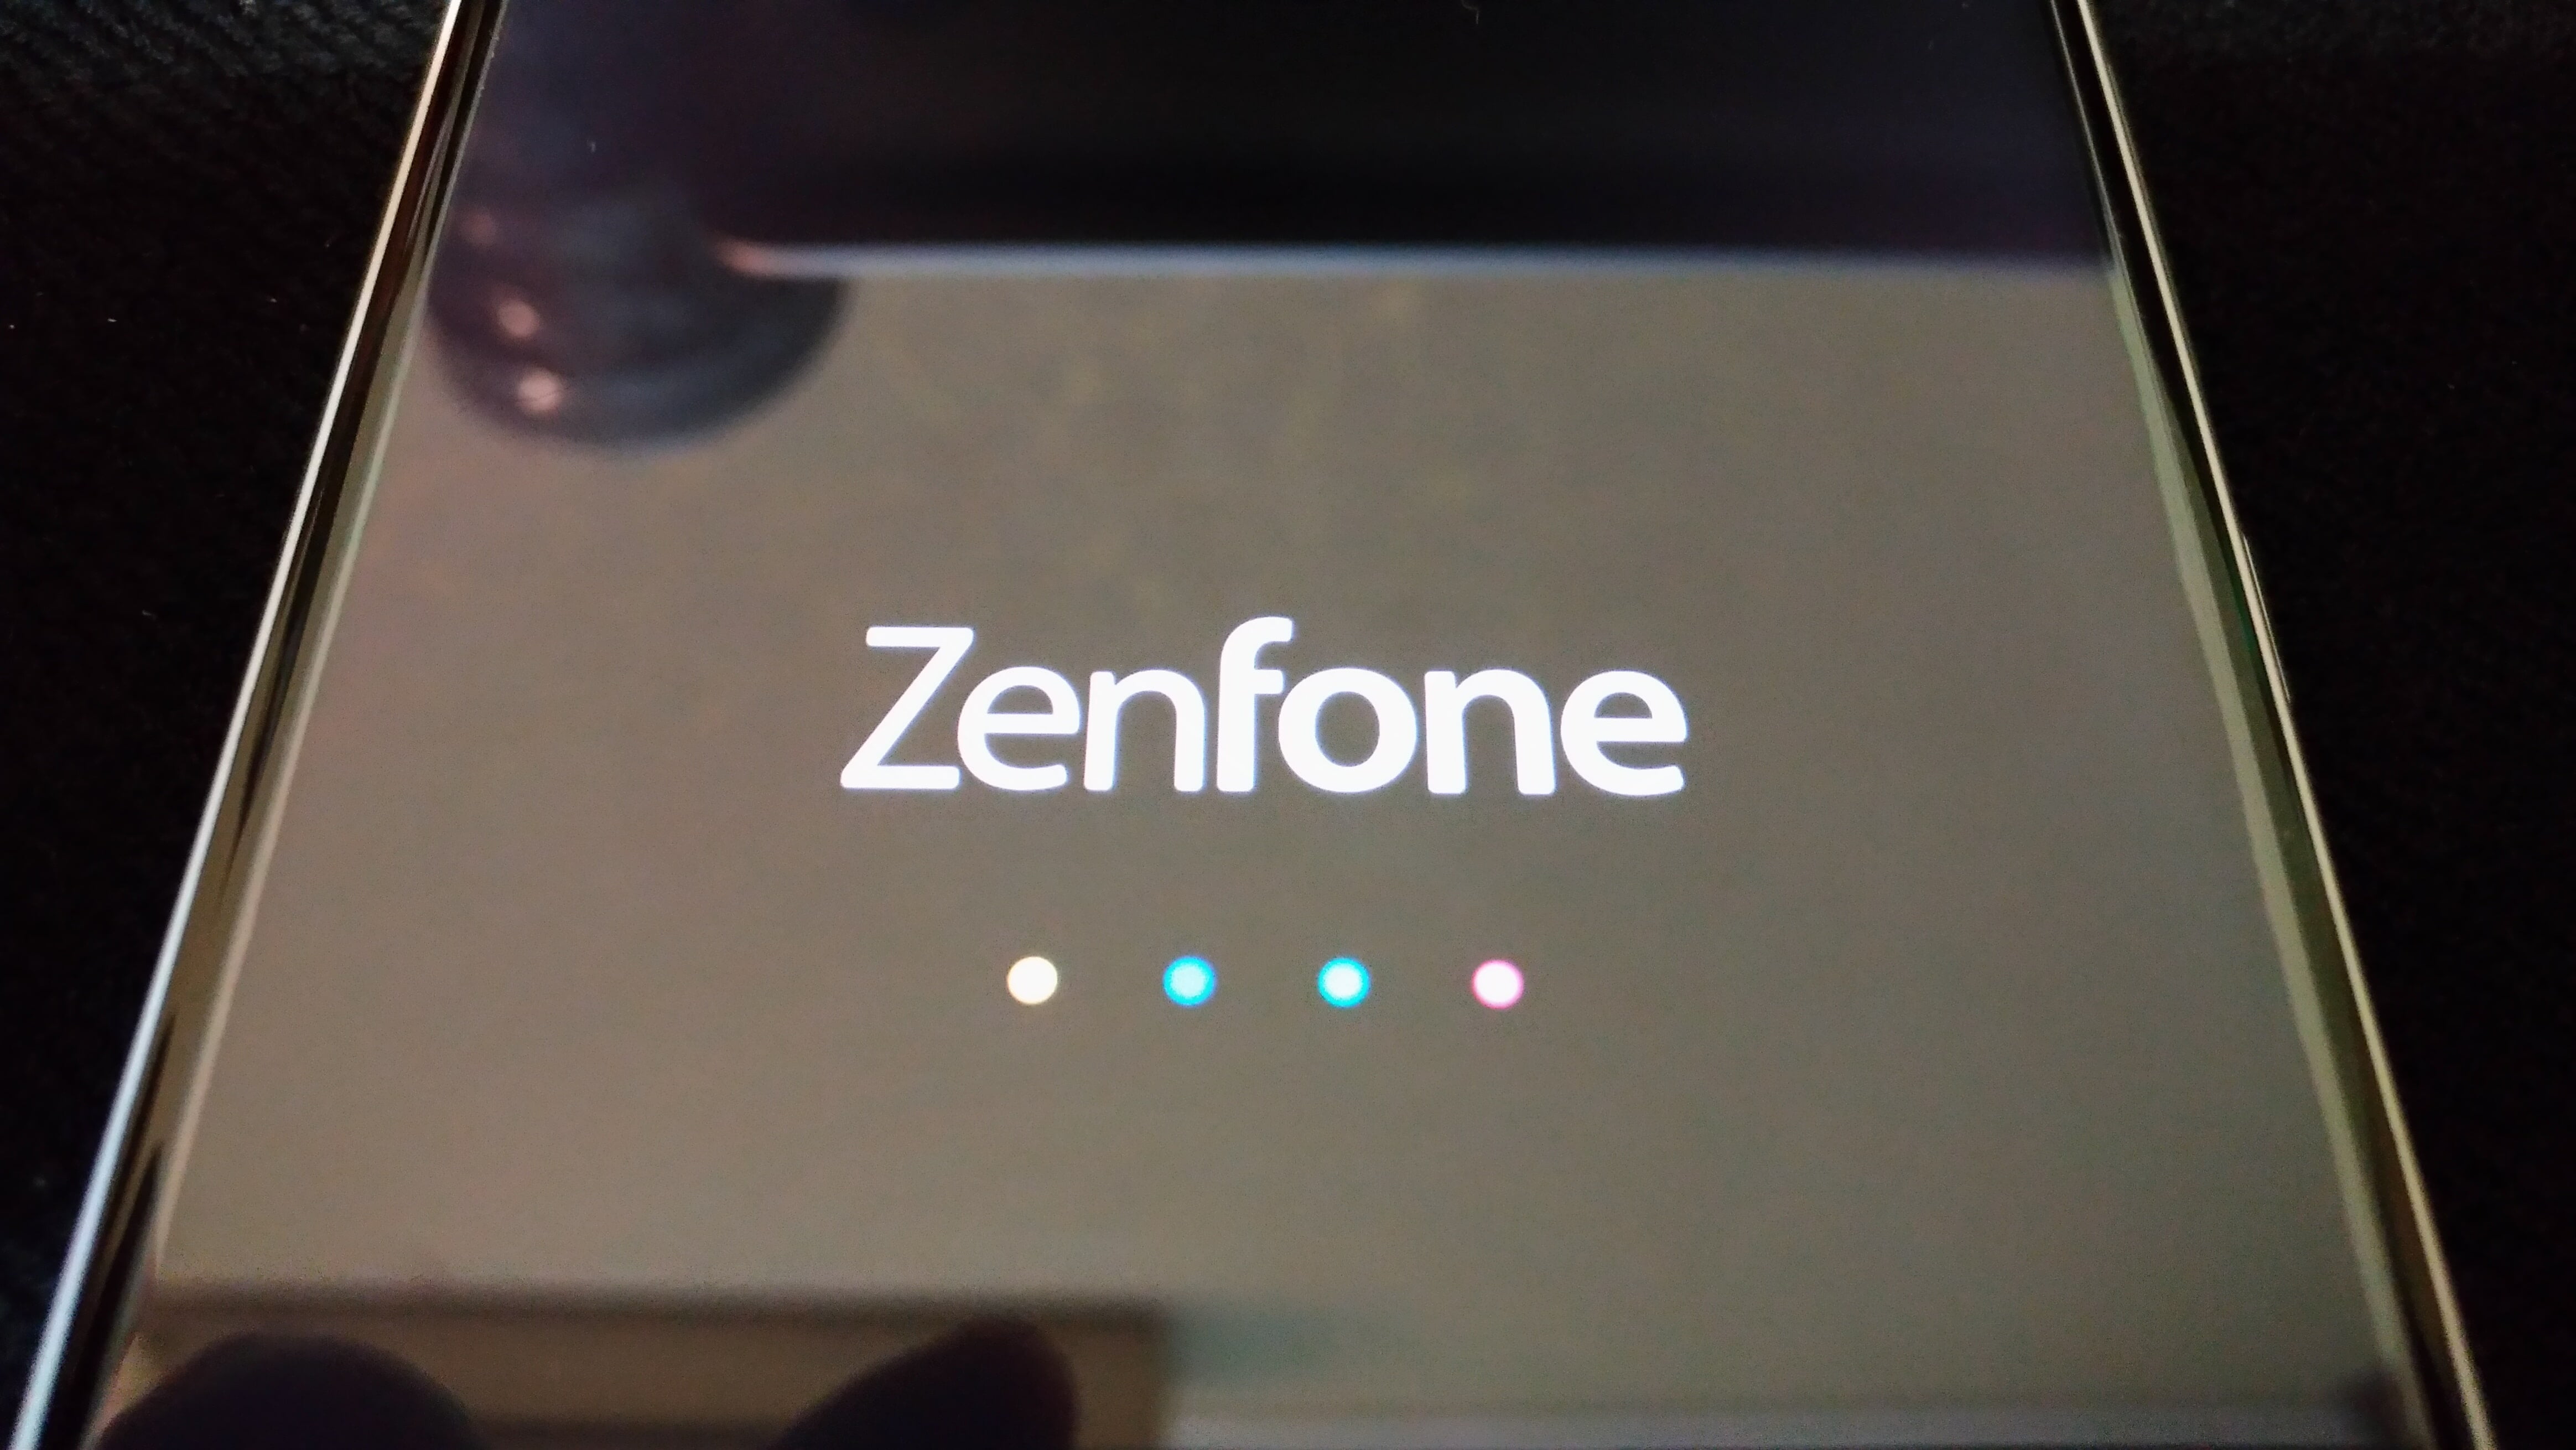 P 20181112 215419 vHDR On min - 【開箱】Zenfone 5 ZE620KL 孔劉雪花白，純淨外型與流暢體驗的完美組合